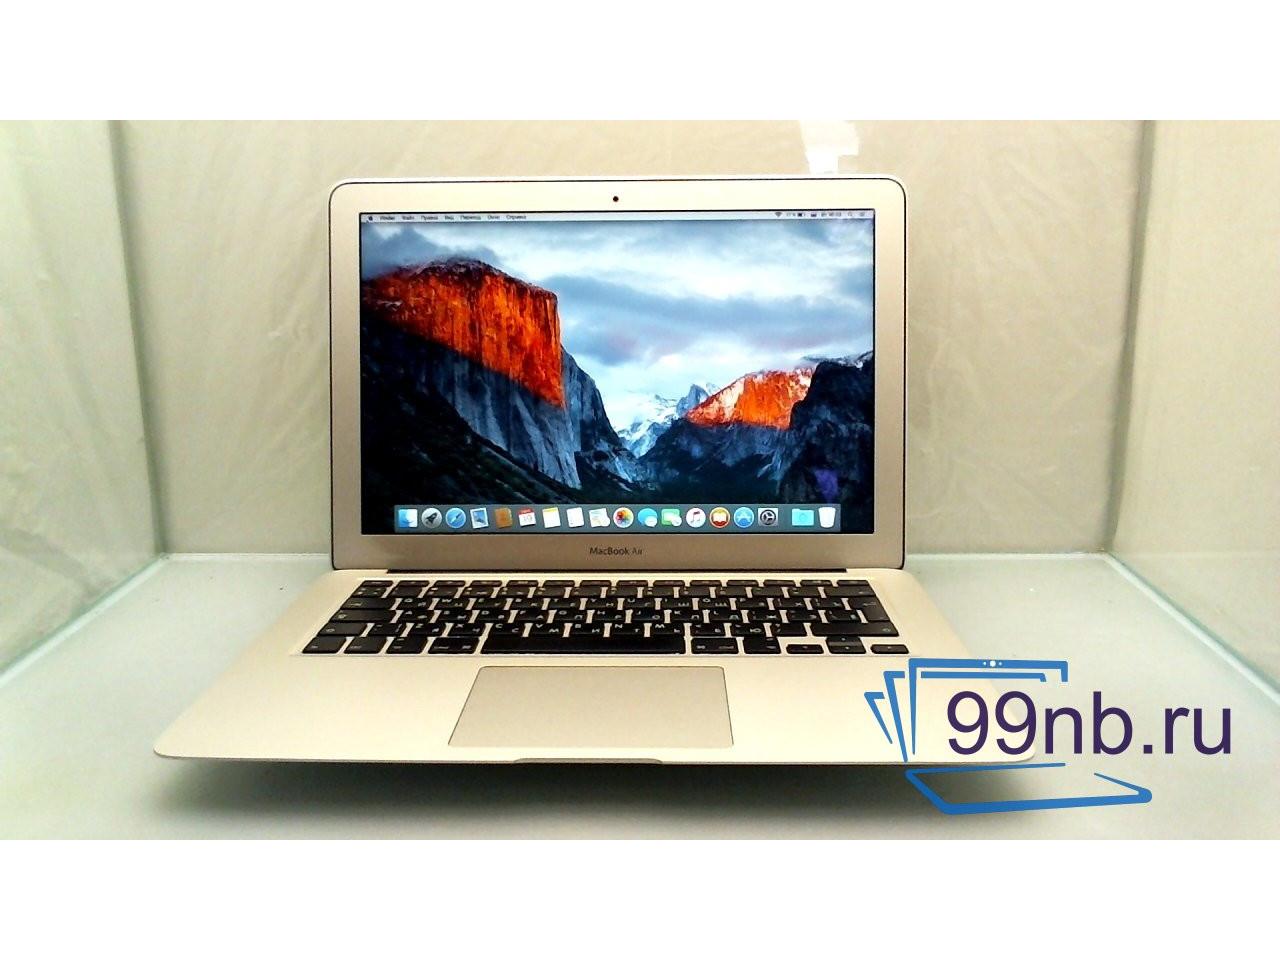 Macbook inch 13,mid 2011